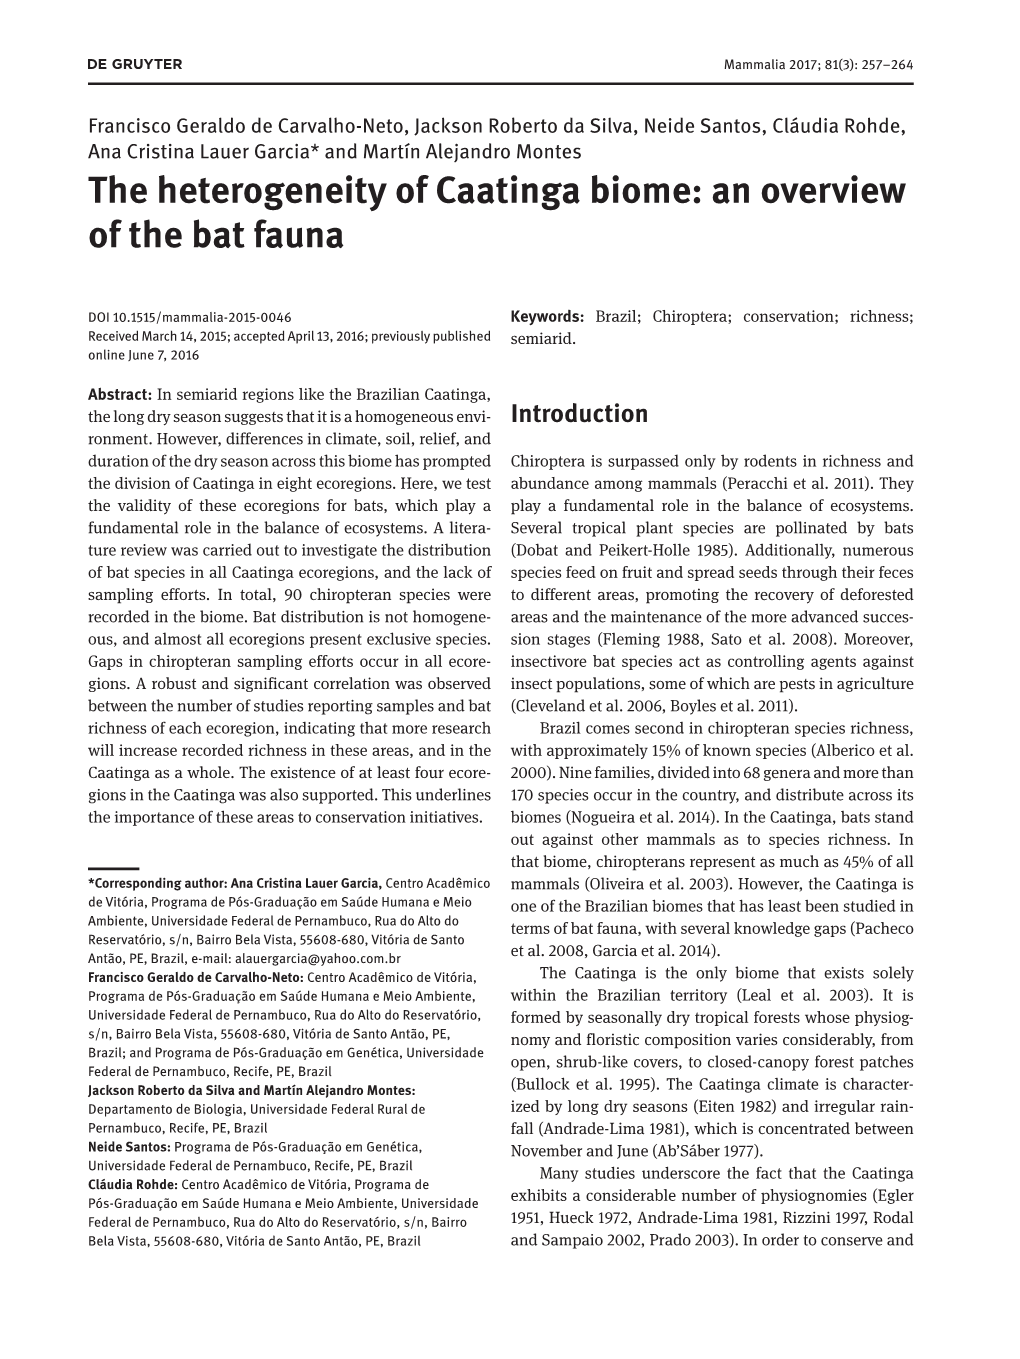 The Heterogeneity of Caatinga Biome: an Overview of the Bat Fauna